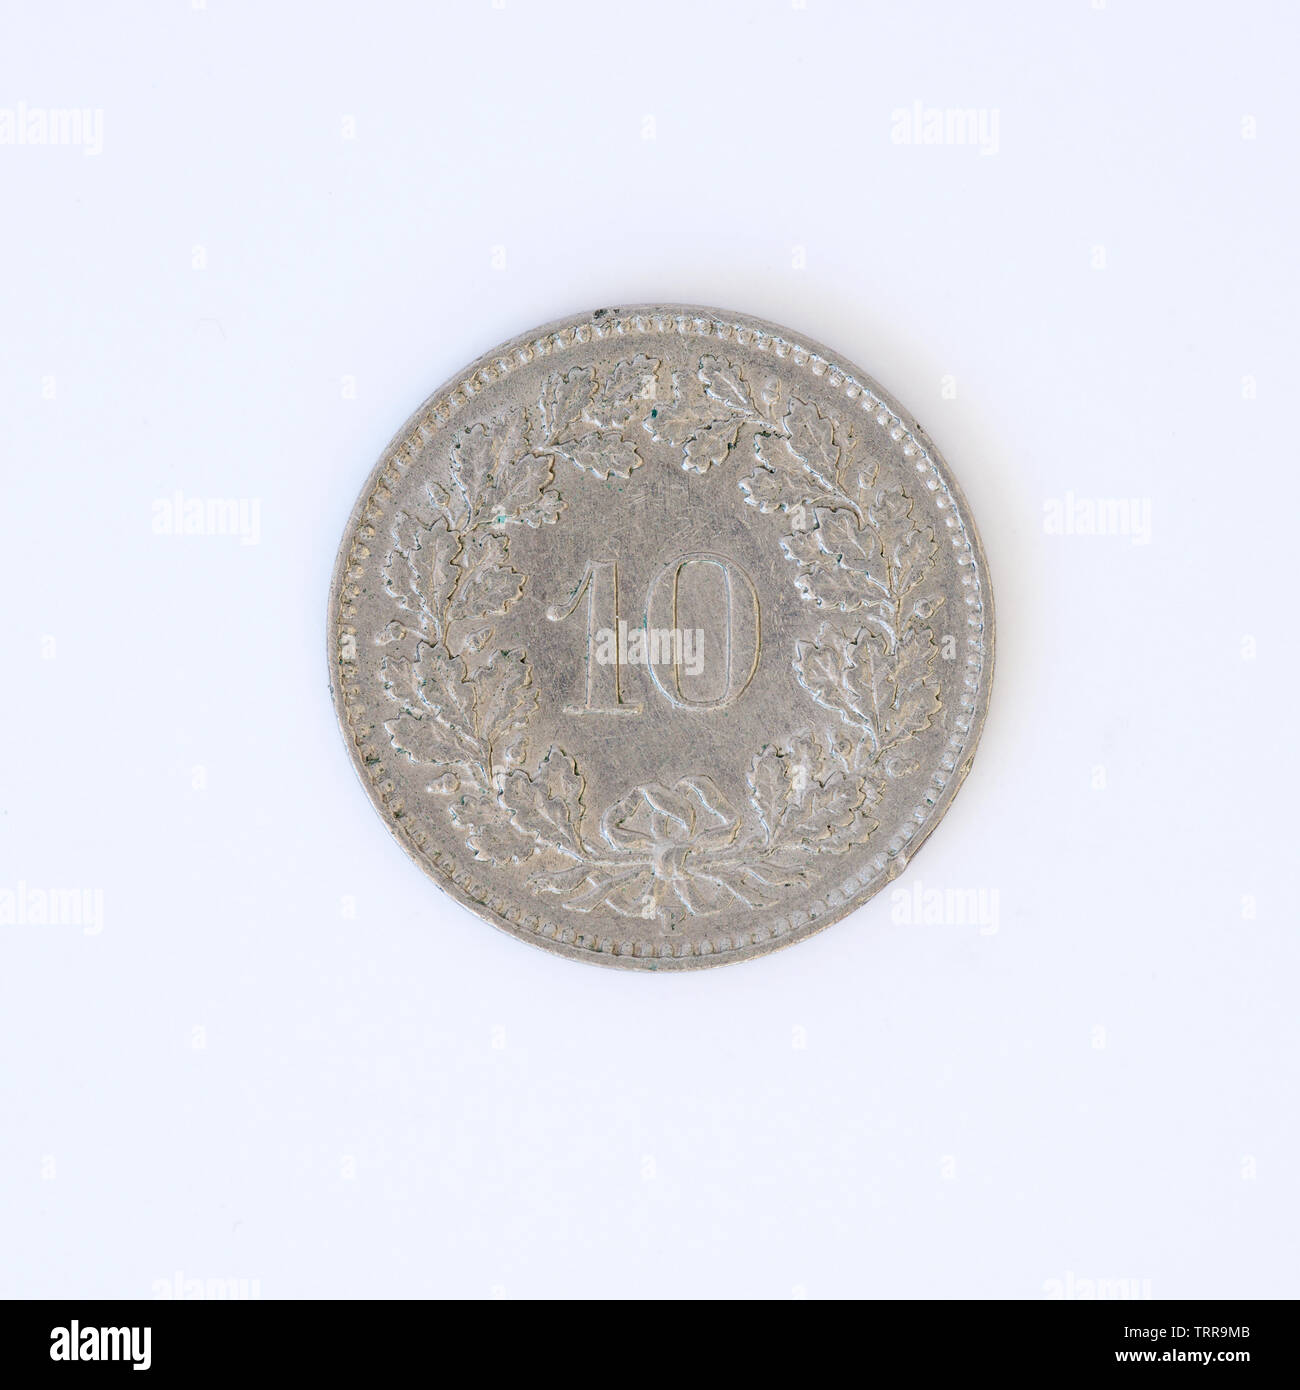 Switzerland 10 Rappen Coin - 1962 Stock Photo